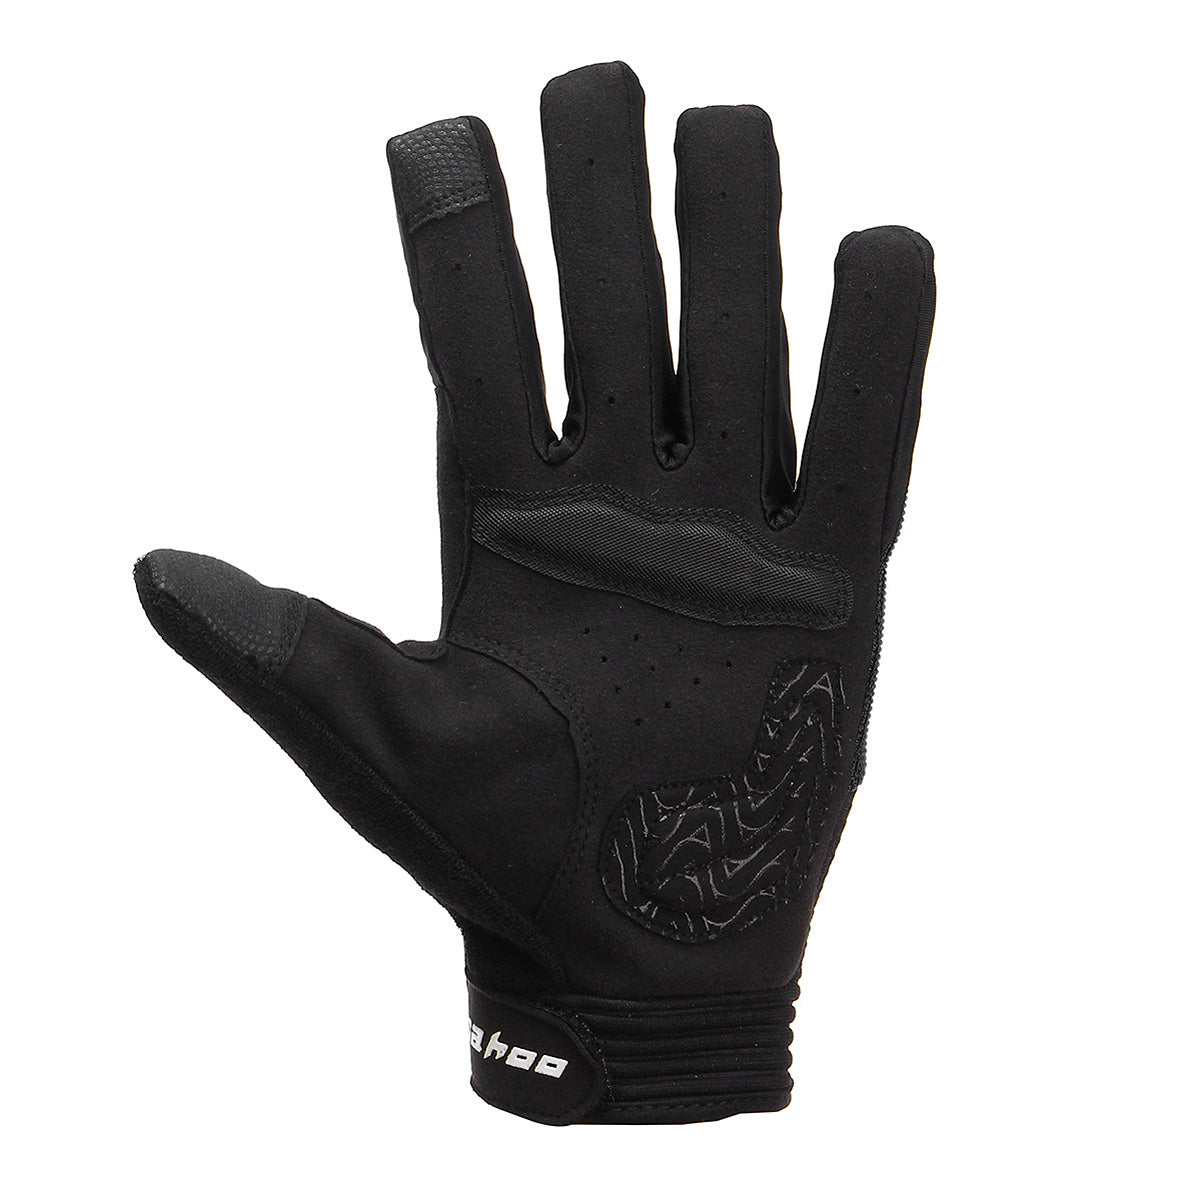 Black SAHOO Winter Cycling Gloves Full Finger Bike Motorcycle Warm Gloves